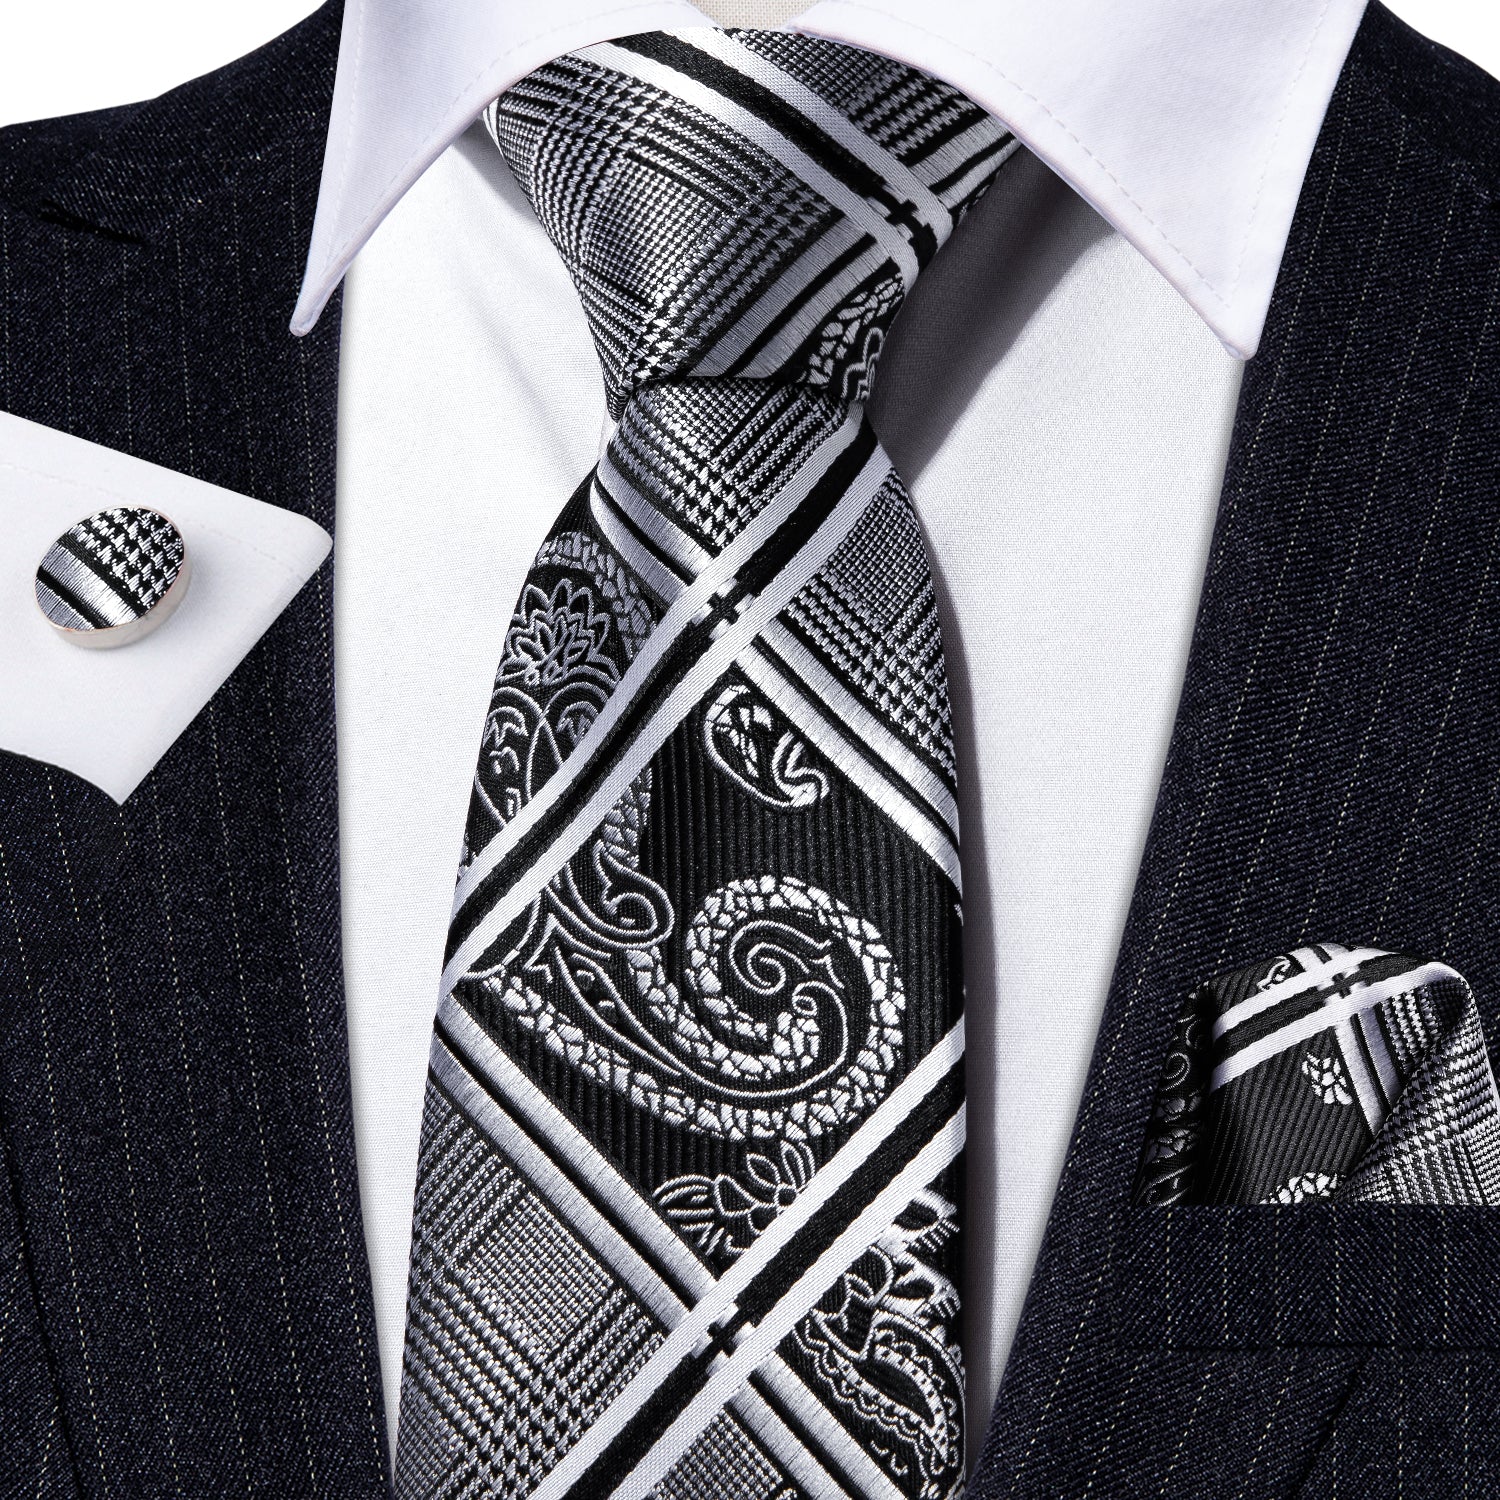 Barry.wang Black Tie Grey Plaid Men's Tie Pocket Square Cufflinks Set